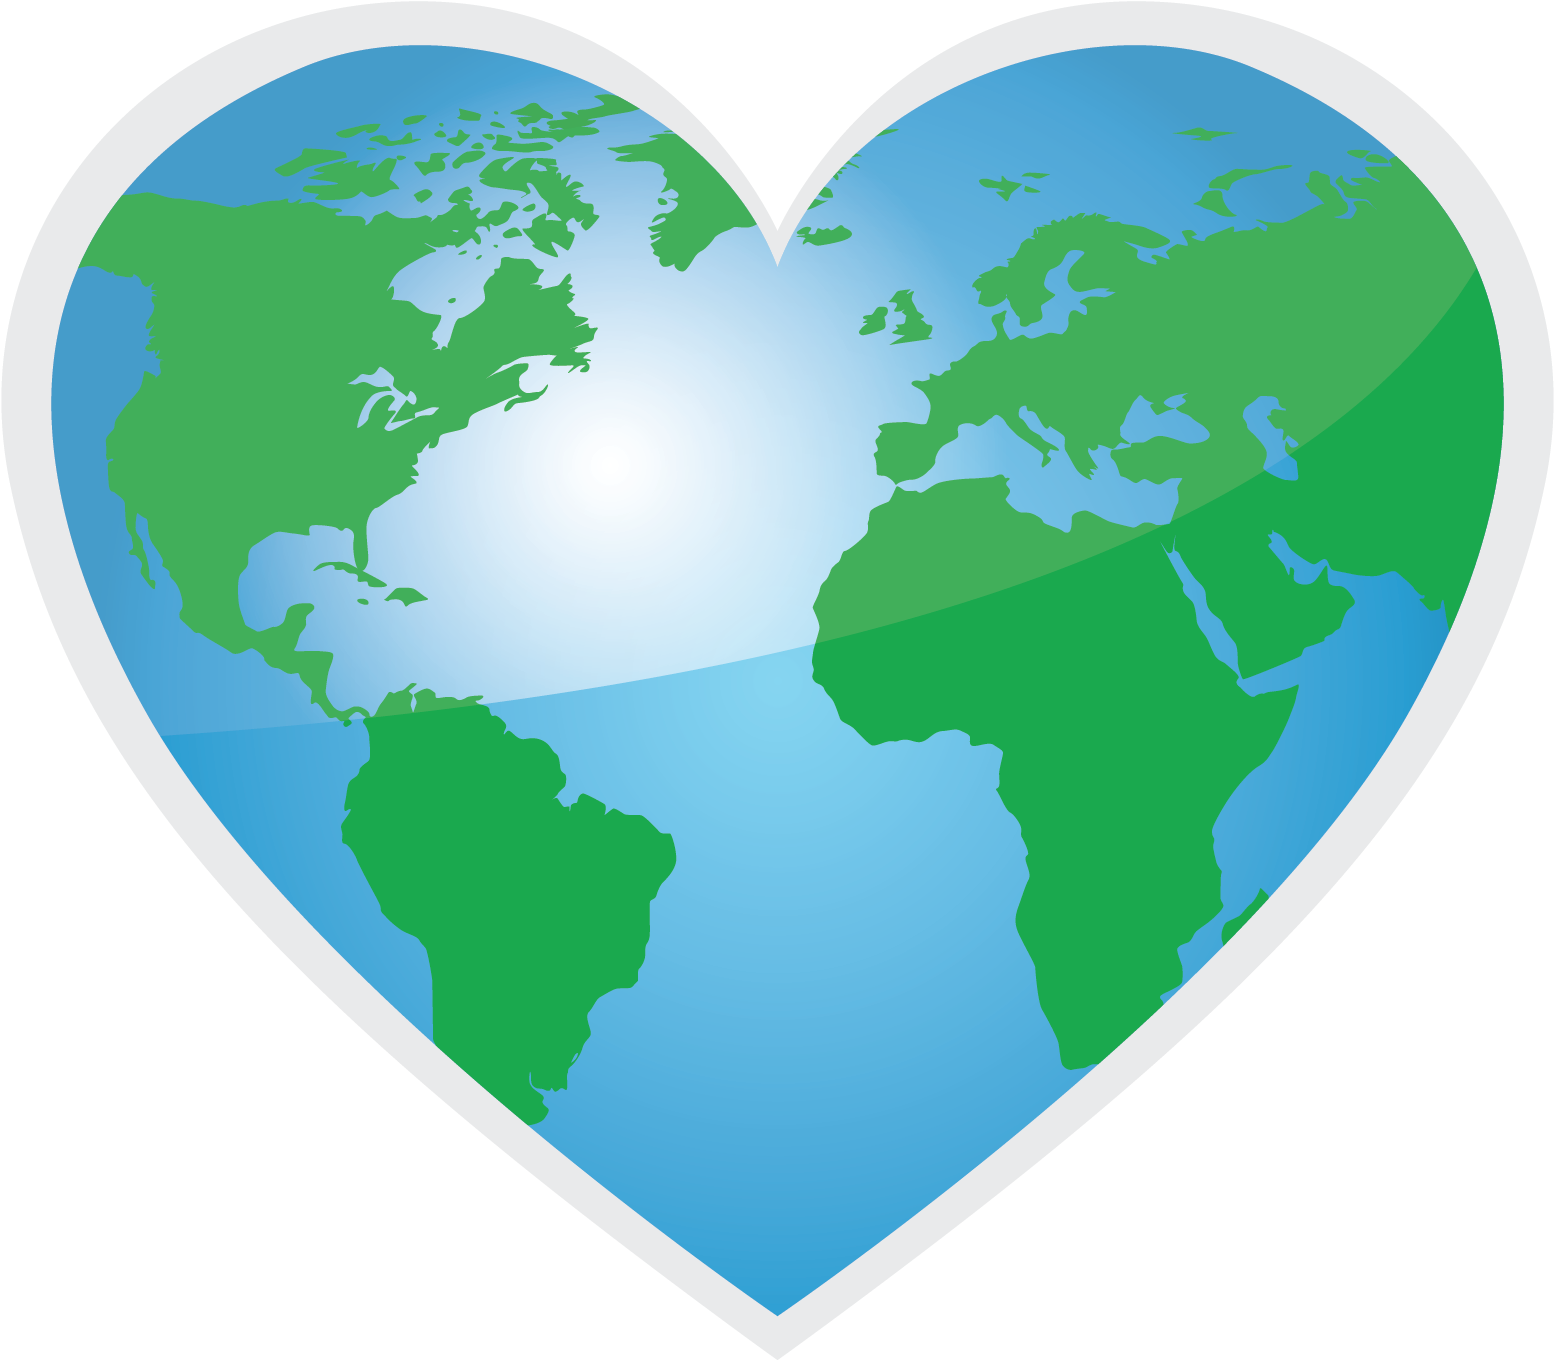 Tpwf Heart 300dpi - Perfect World Foundation (1625x1625)